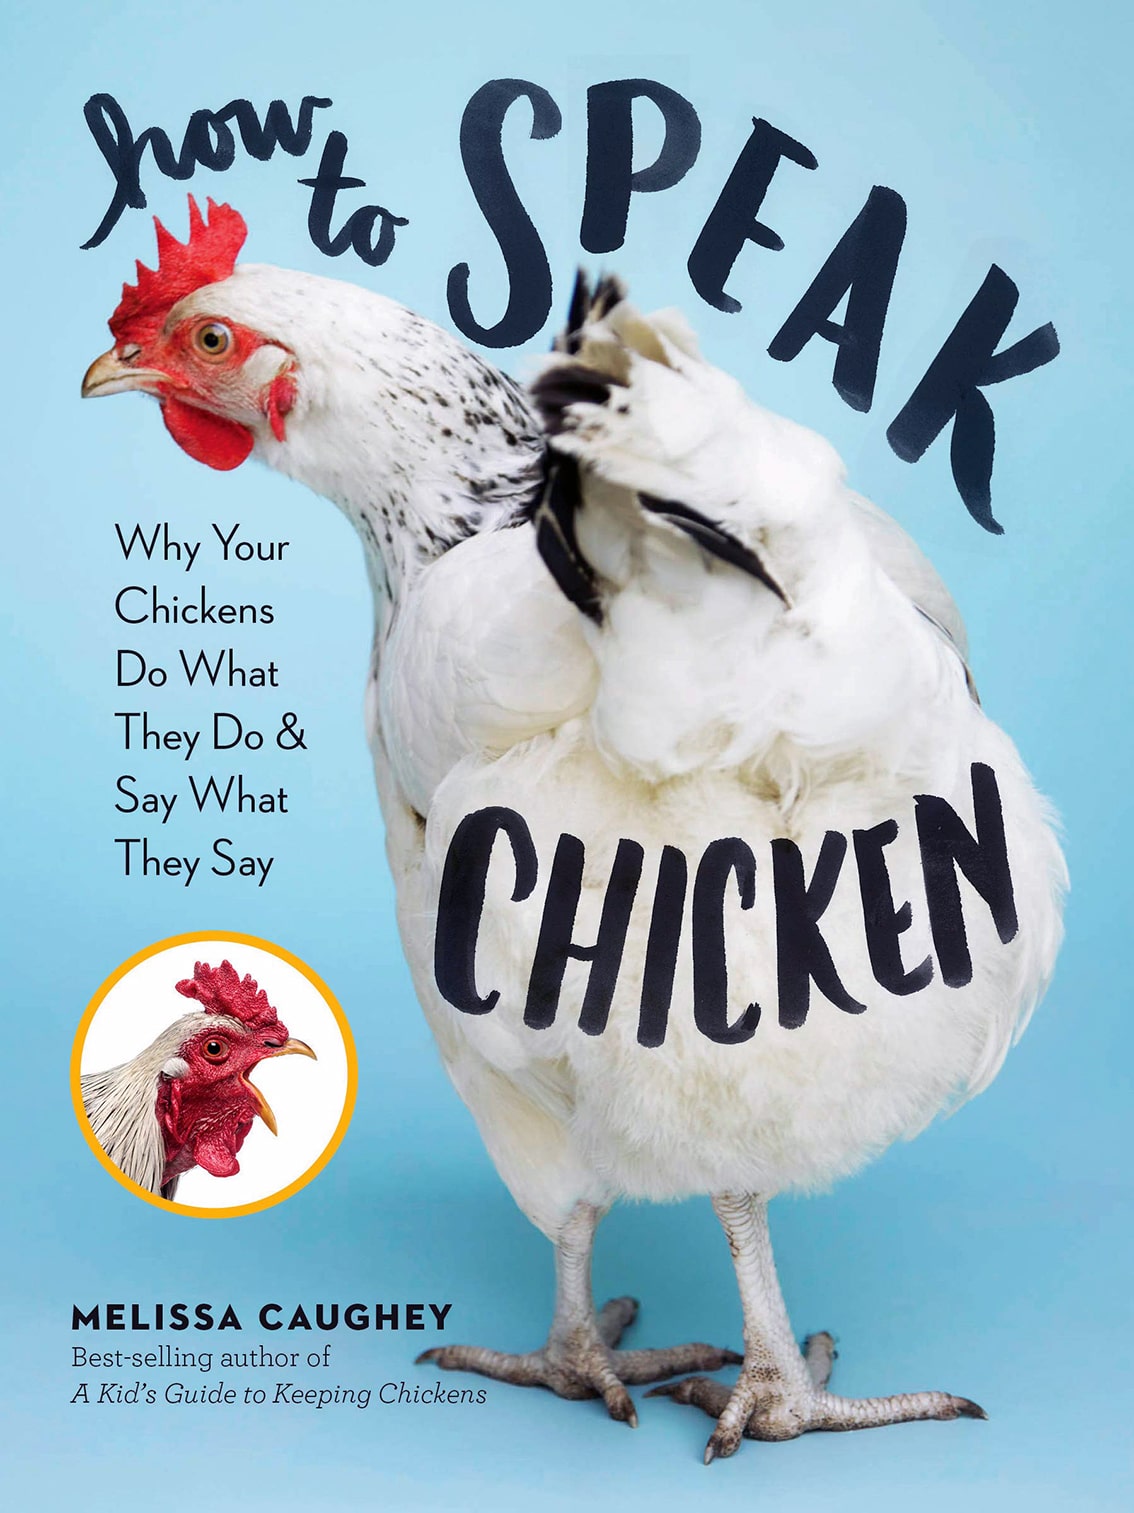 Best books on raising chickens